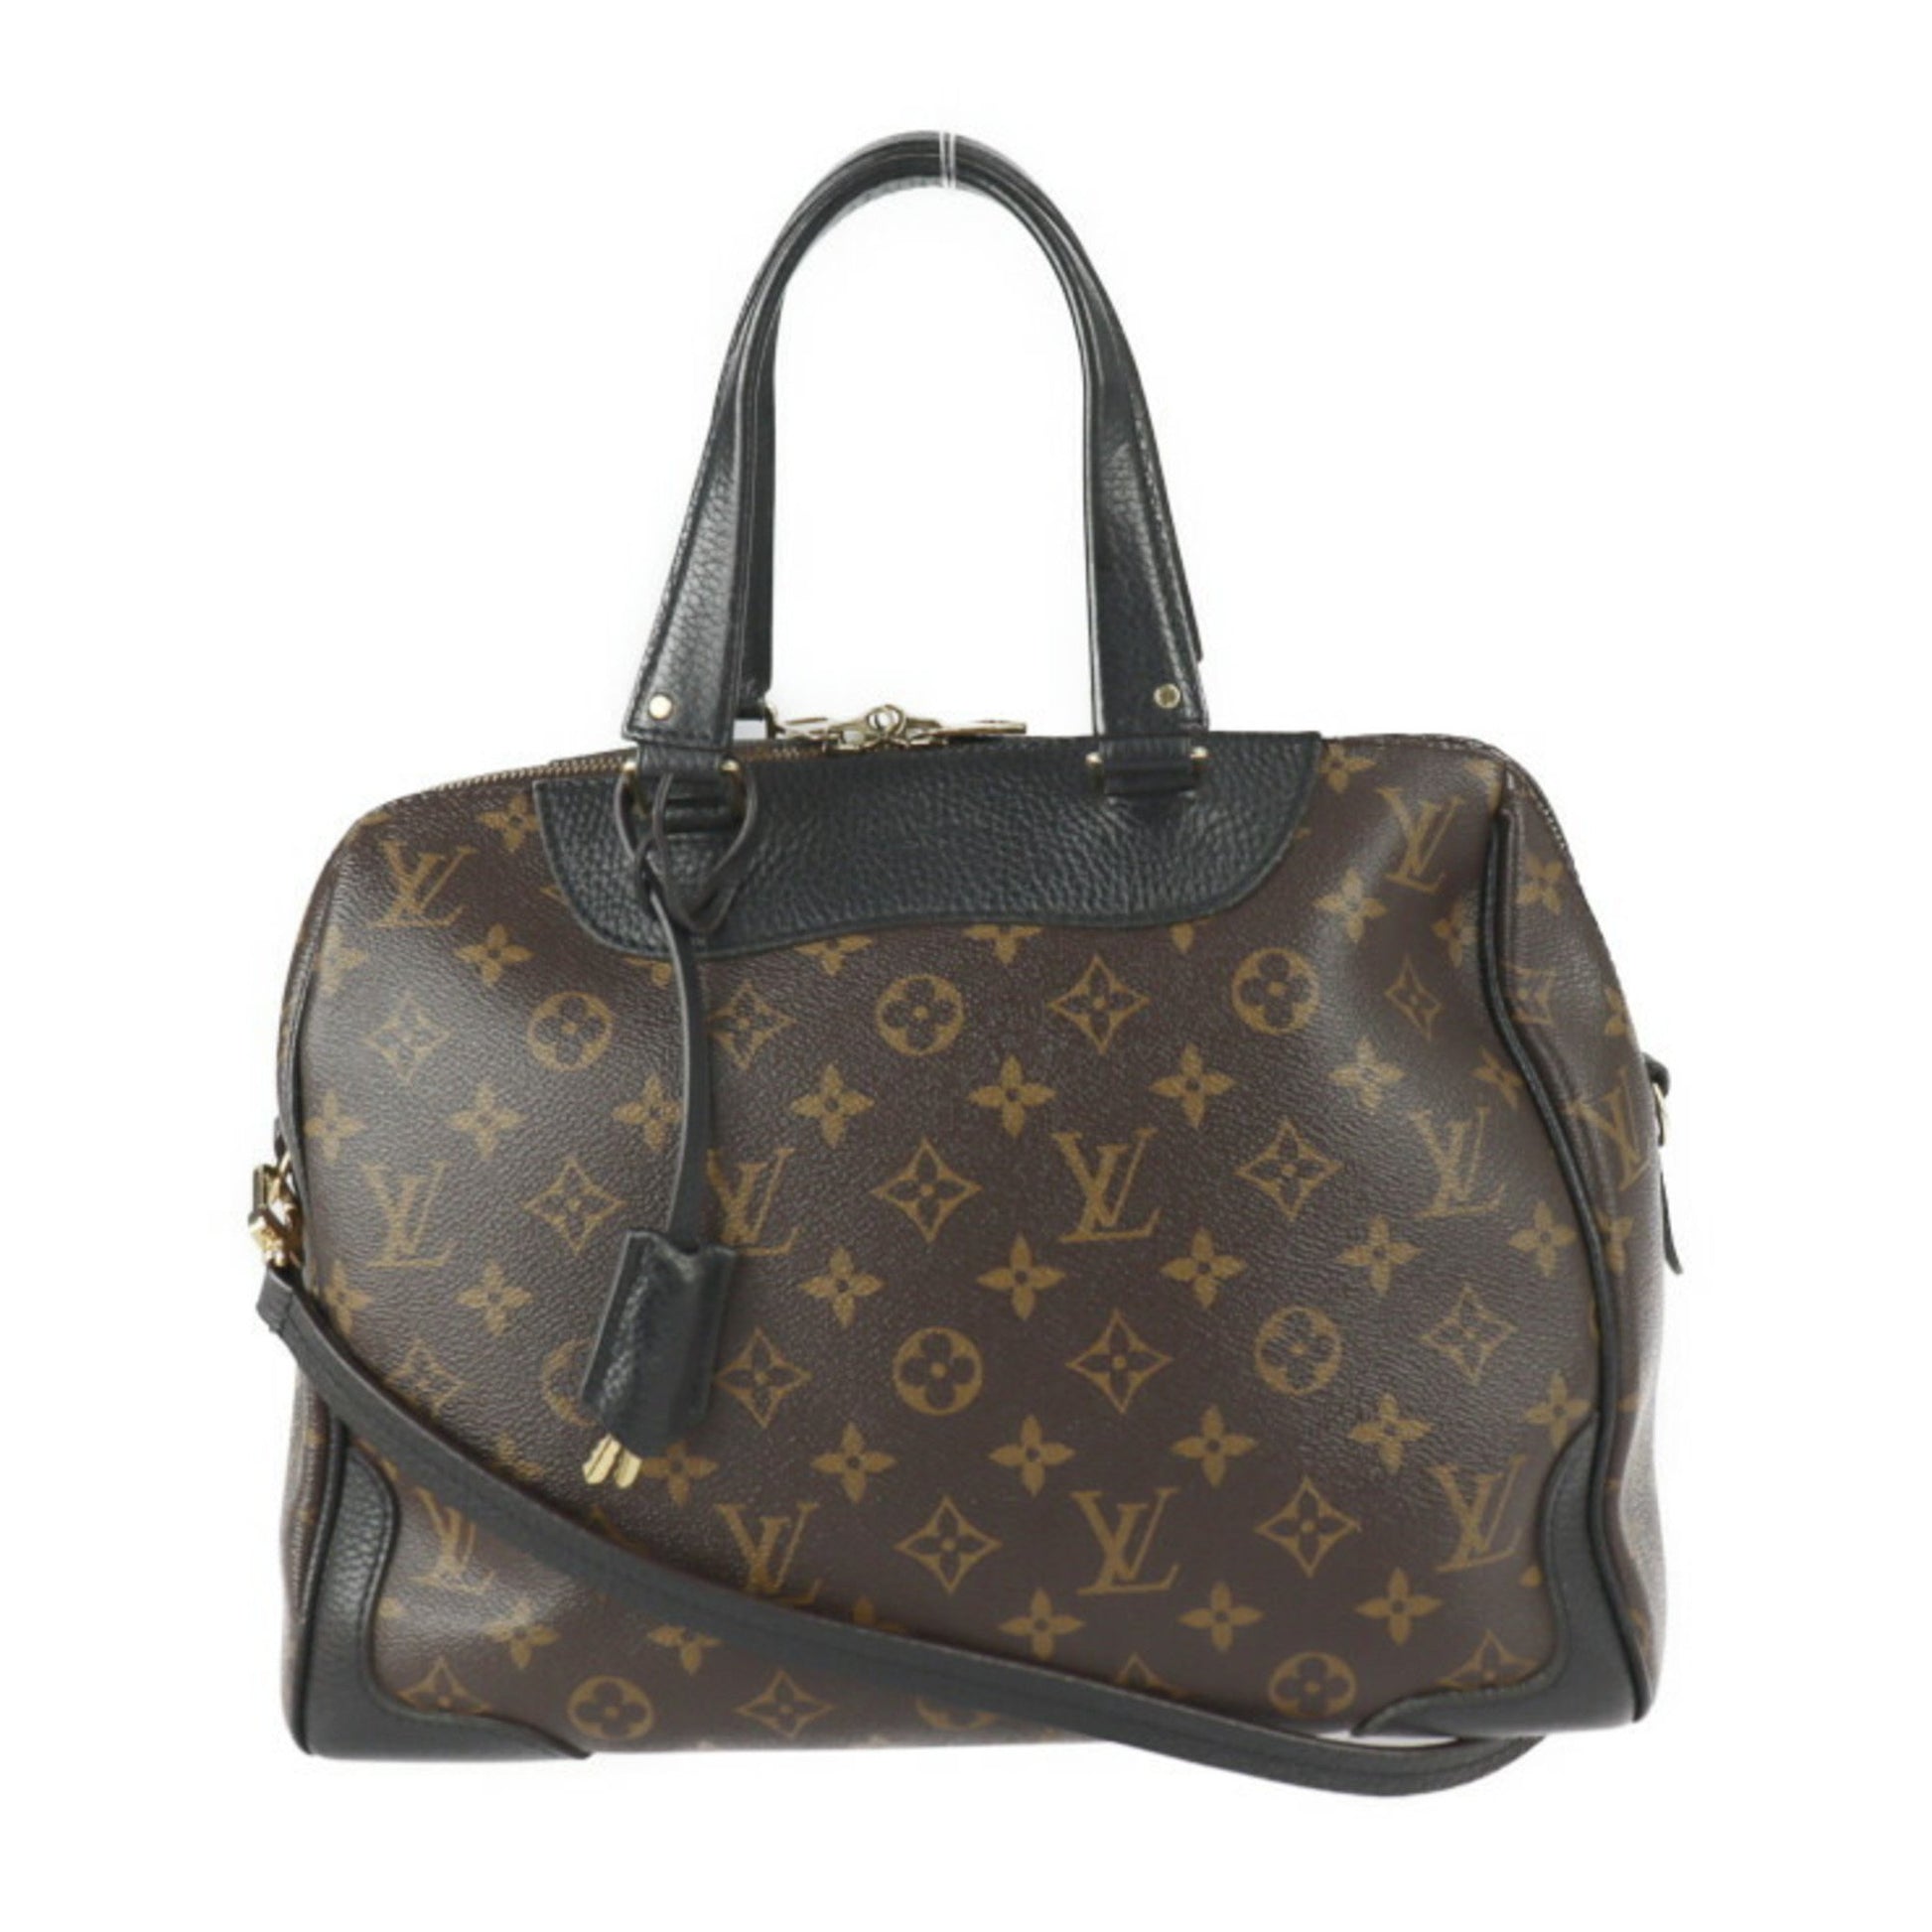 LOUIS VUITTON Monogram Bags & Handbags for Men